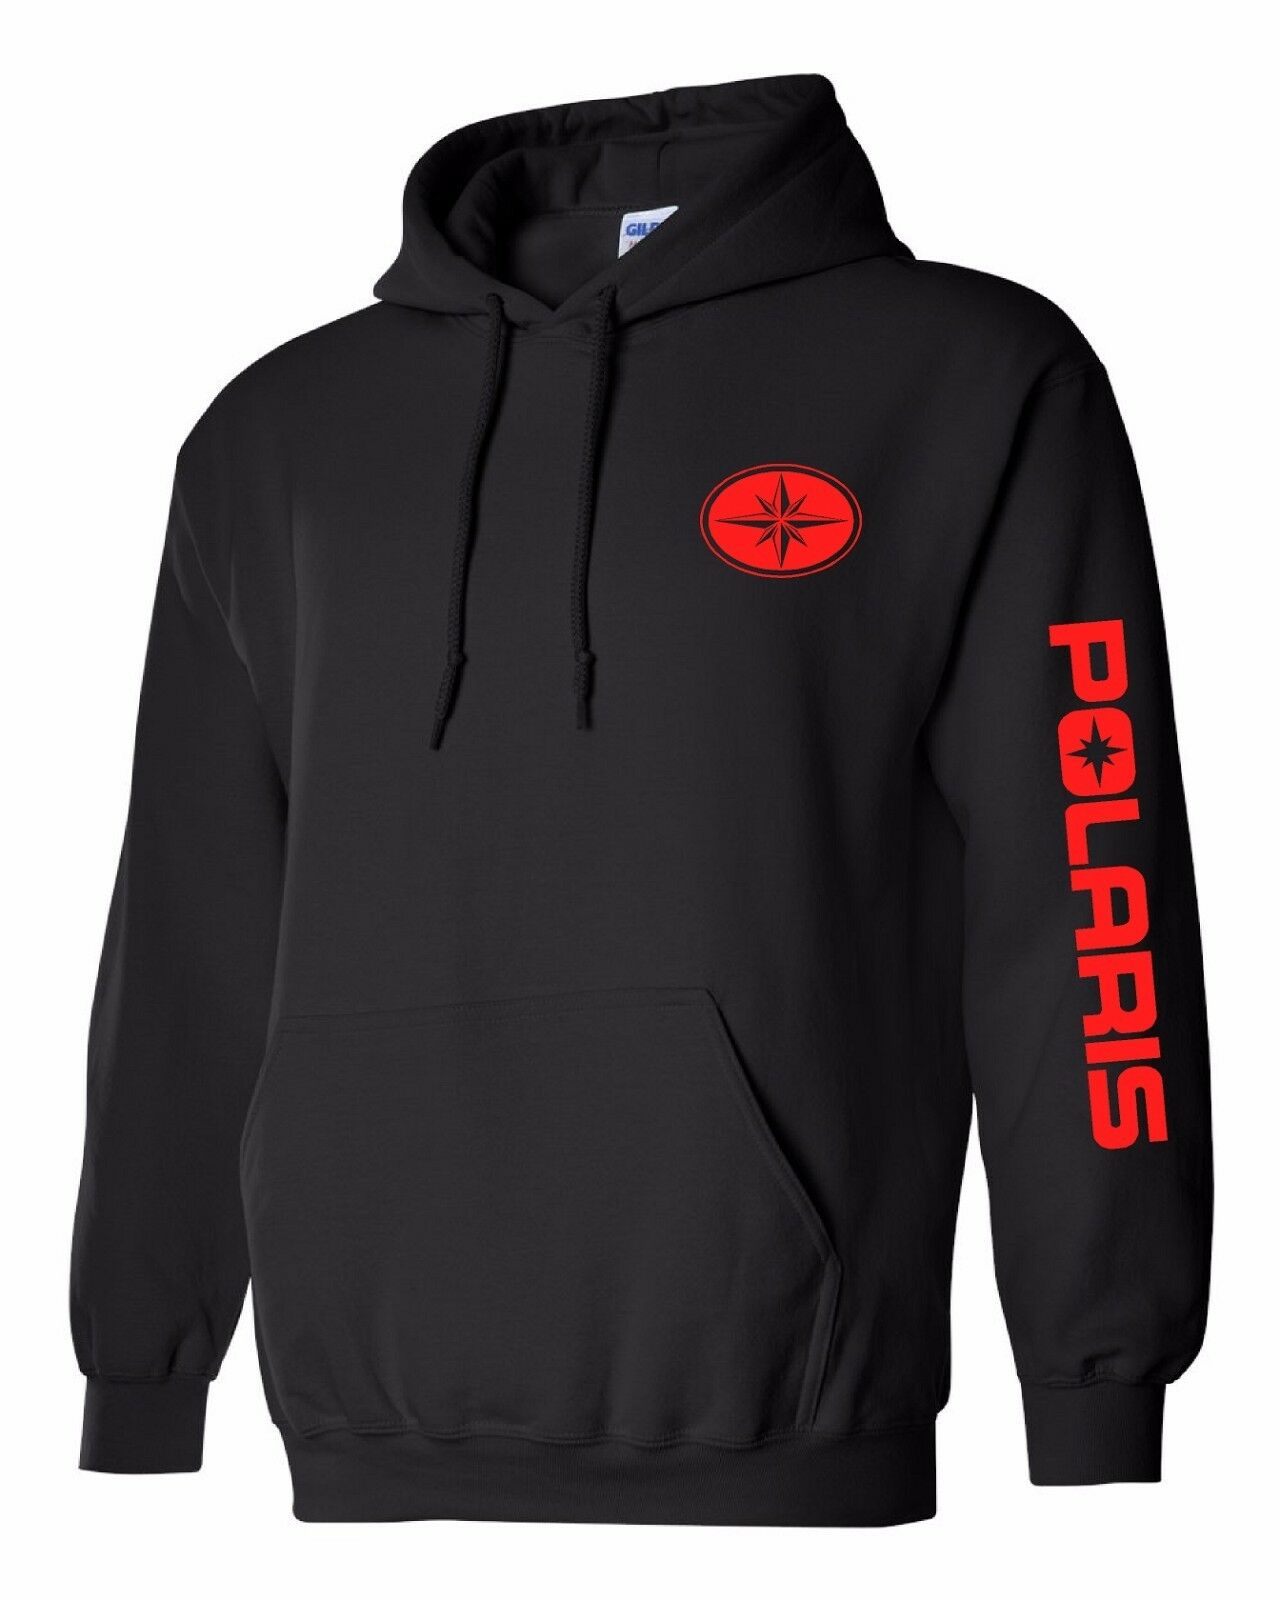 Polaris Style Snowmobile Hoodie Atv Sweatshirt Up To 5x! Choose Design Color!